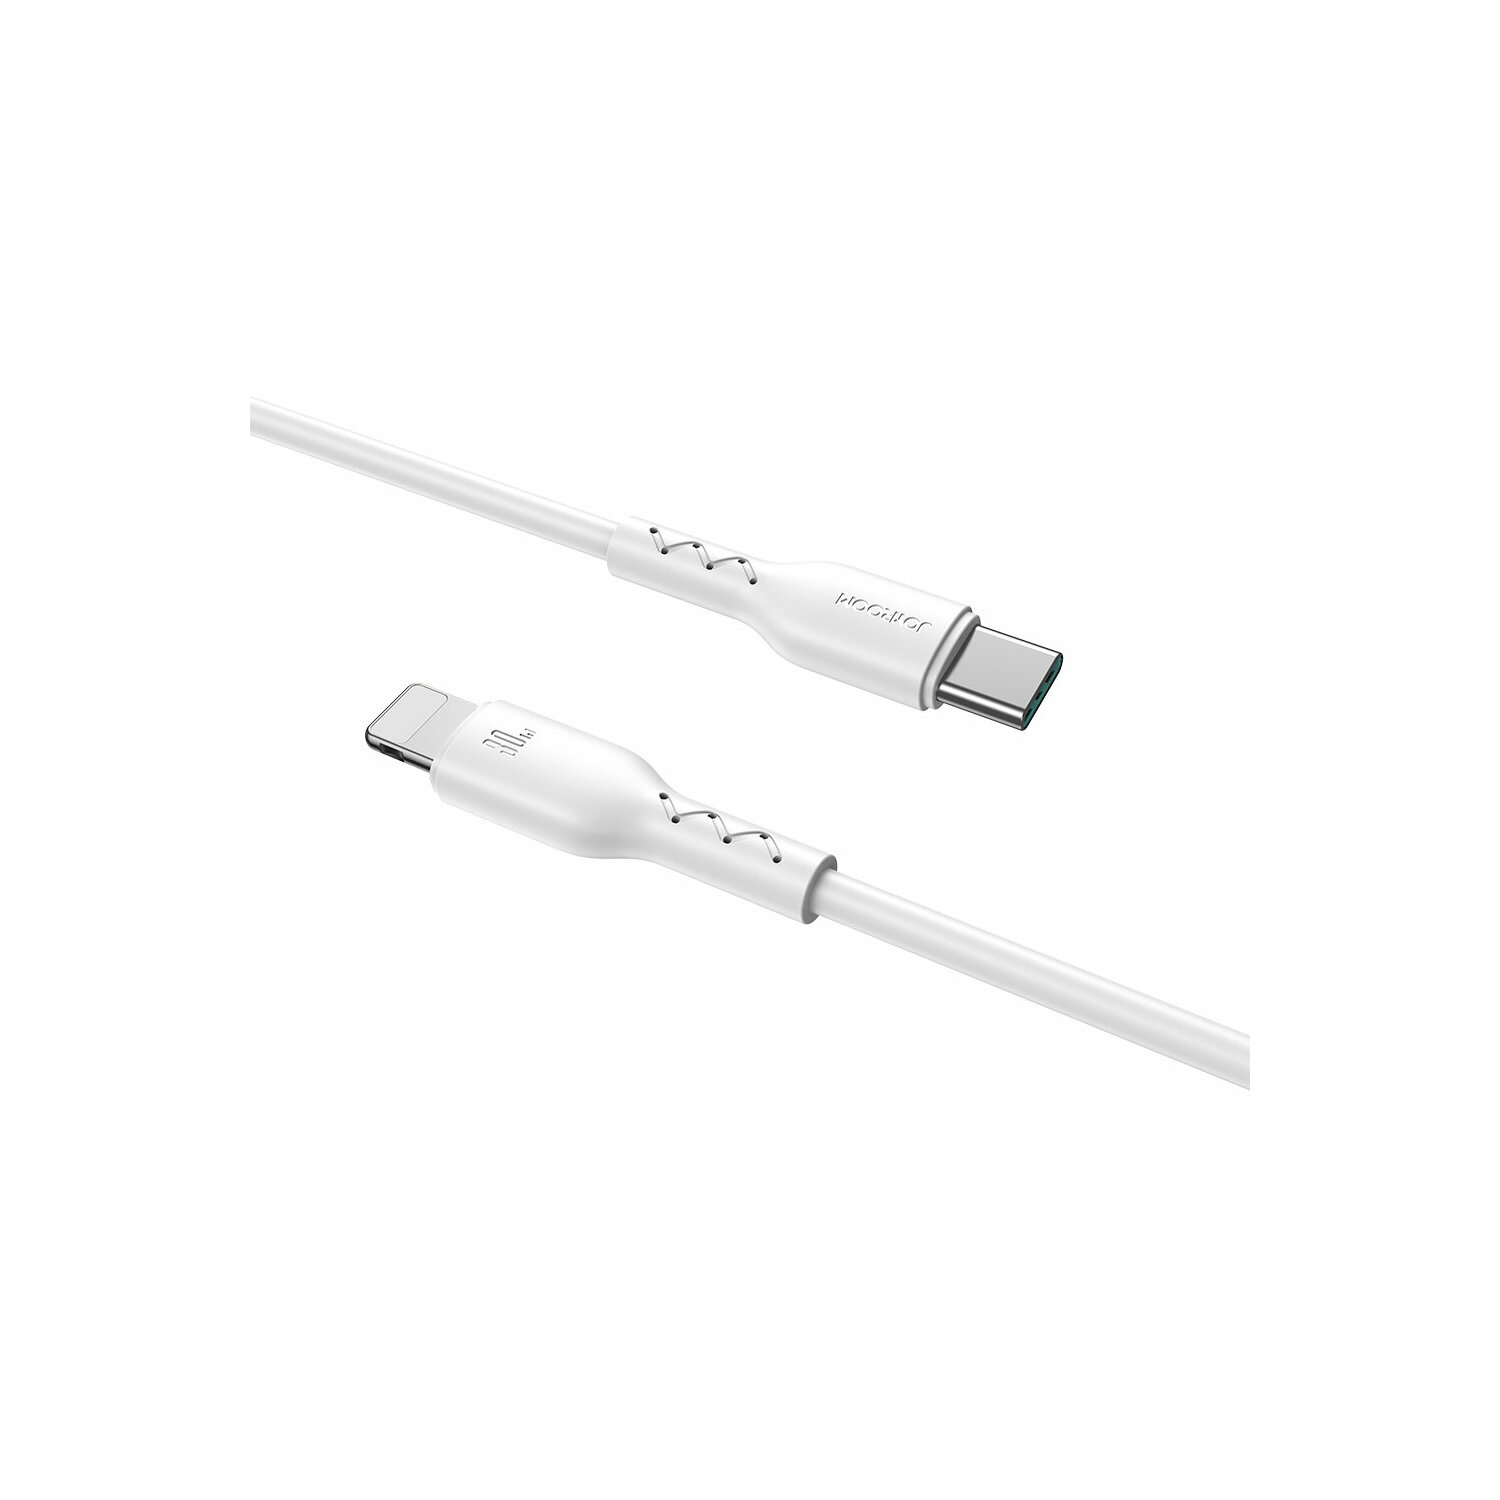 JOYROOM Flash-Charge m, Weiß USB-C/ Series 2 SA26-CL3 30W Ladekabel, Iphone